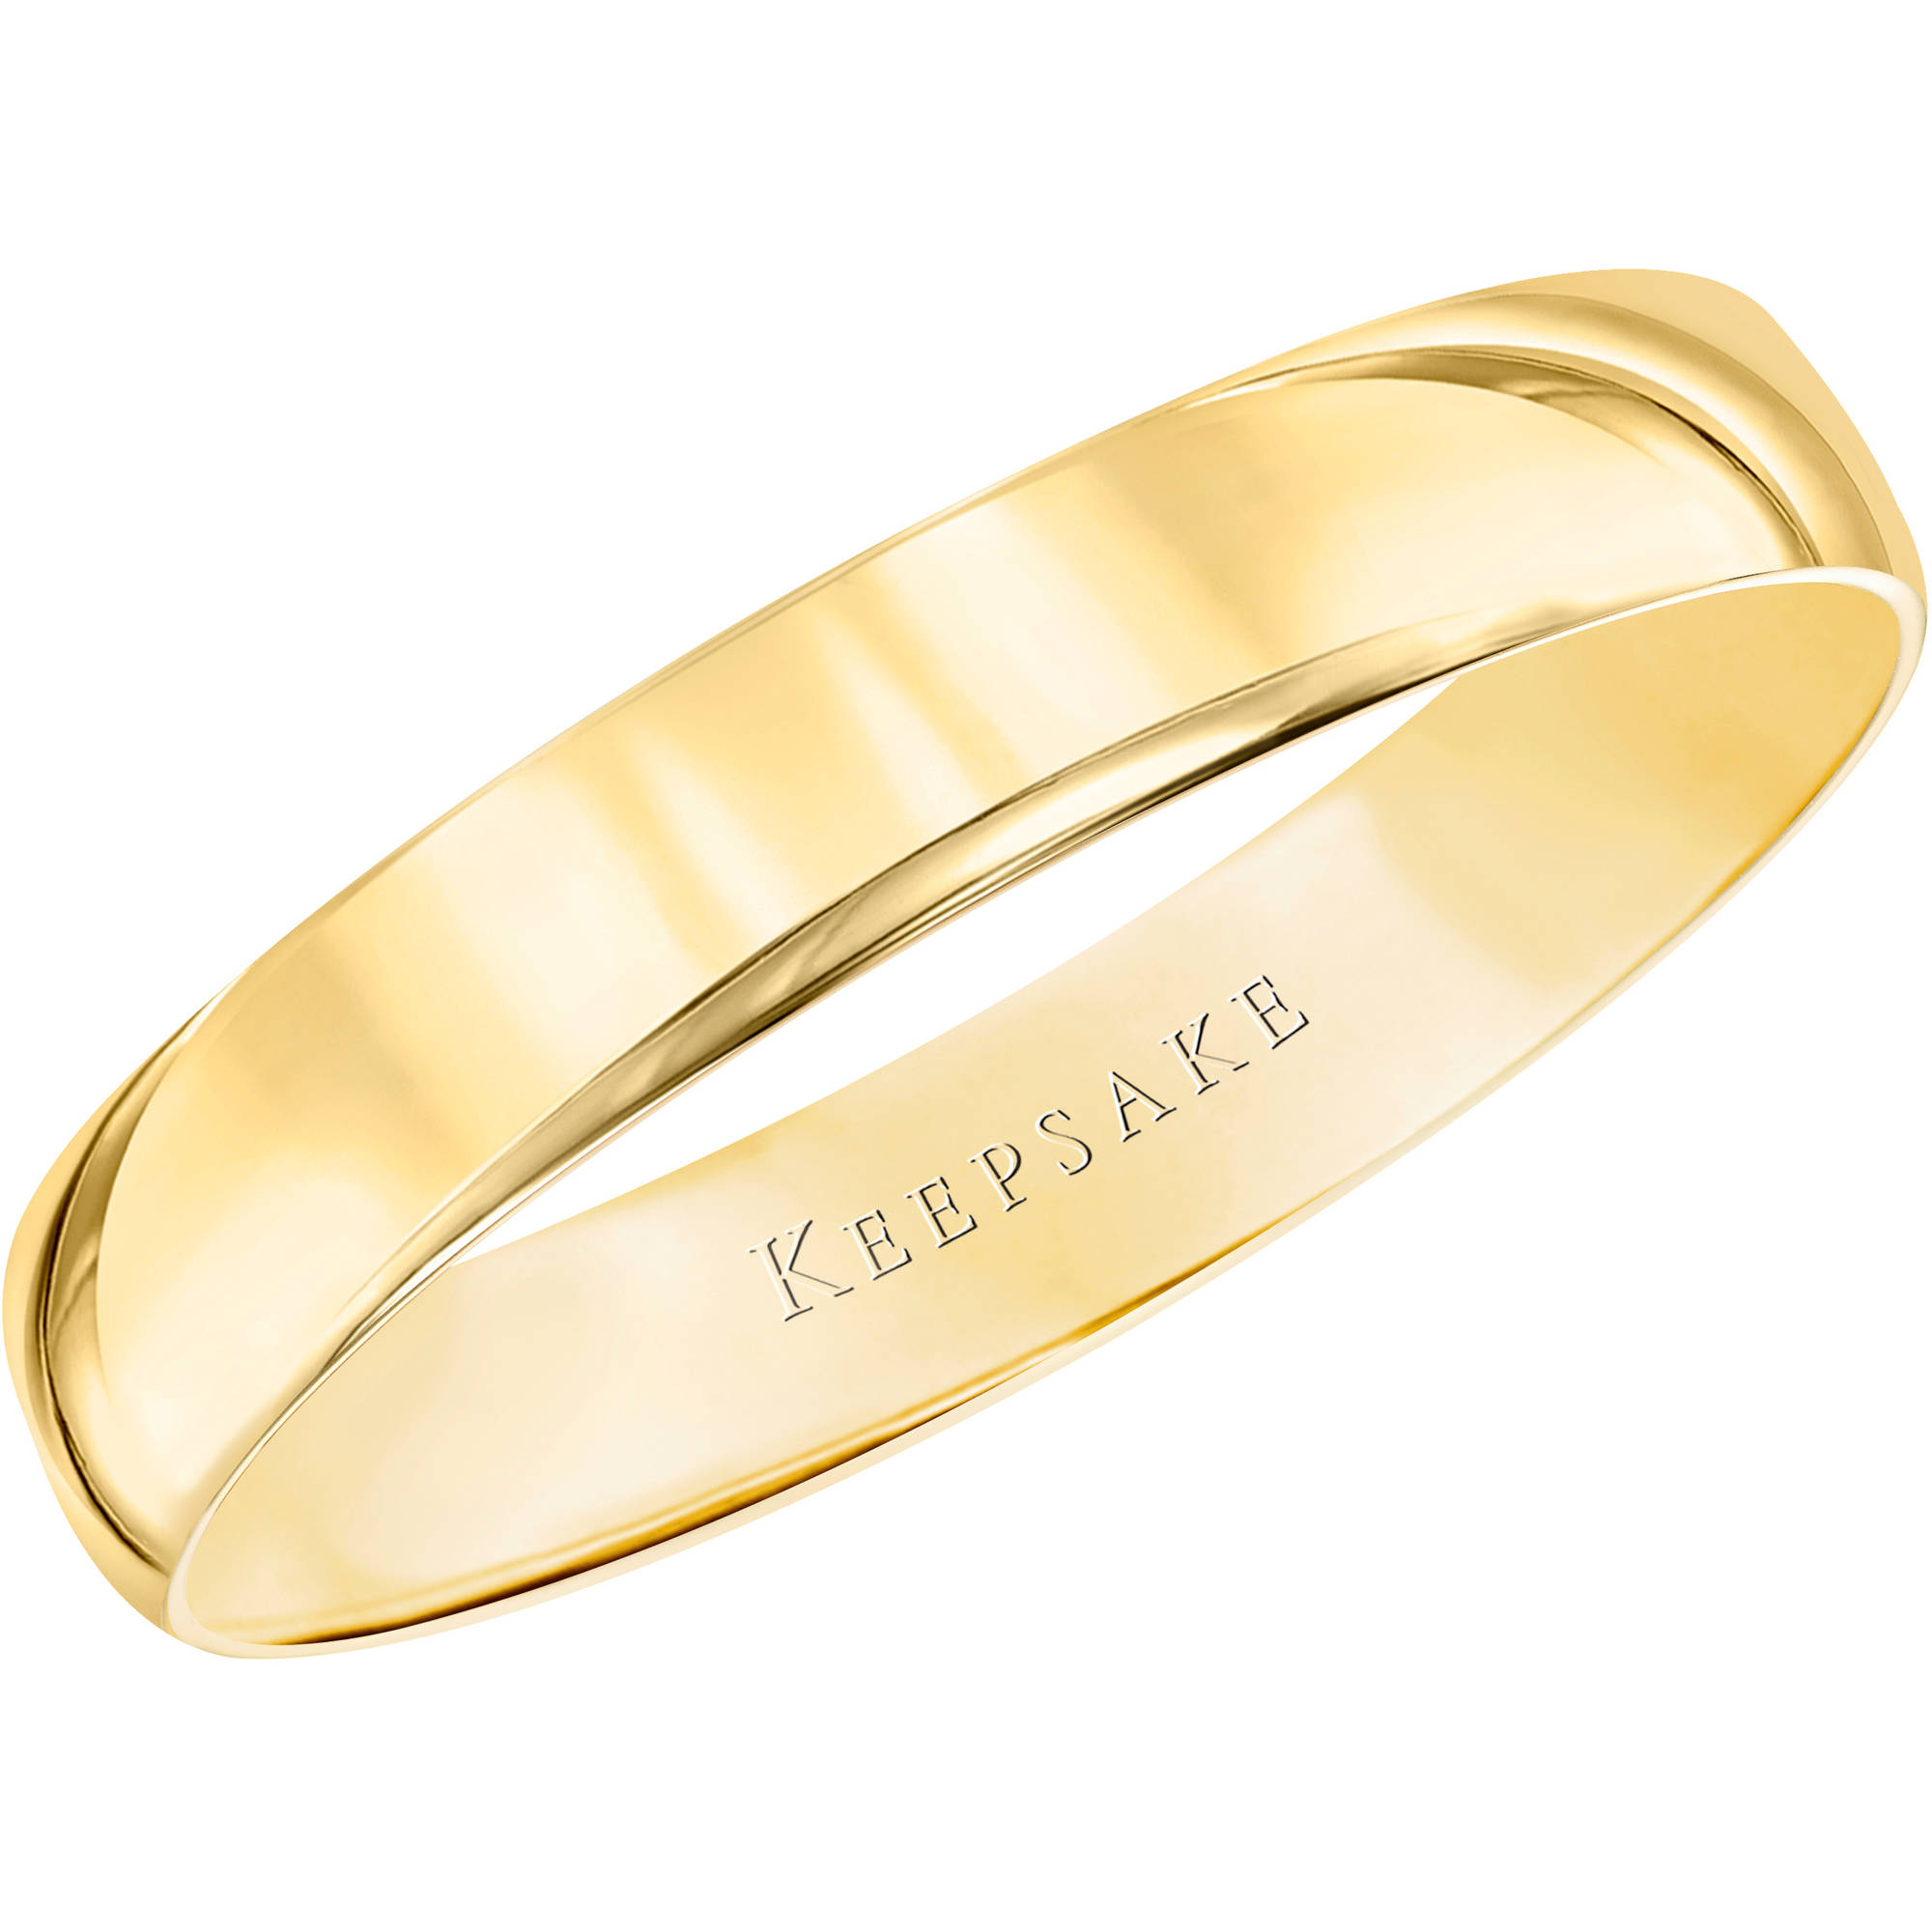 Keepsake 10kt Yellow Gold Comfort Fit Wedding Band, 4mm - image 1 of 2